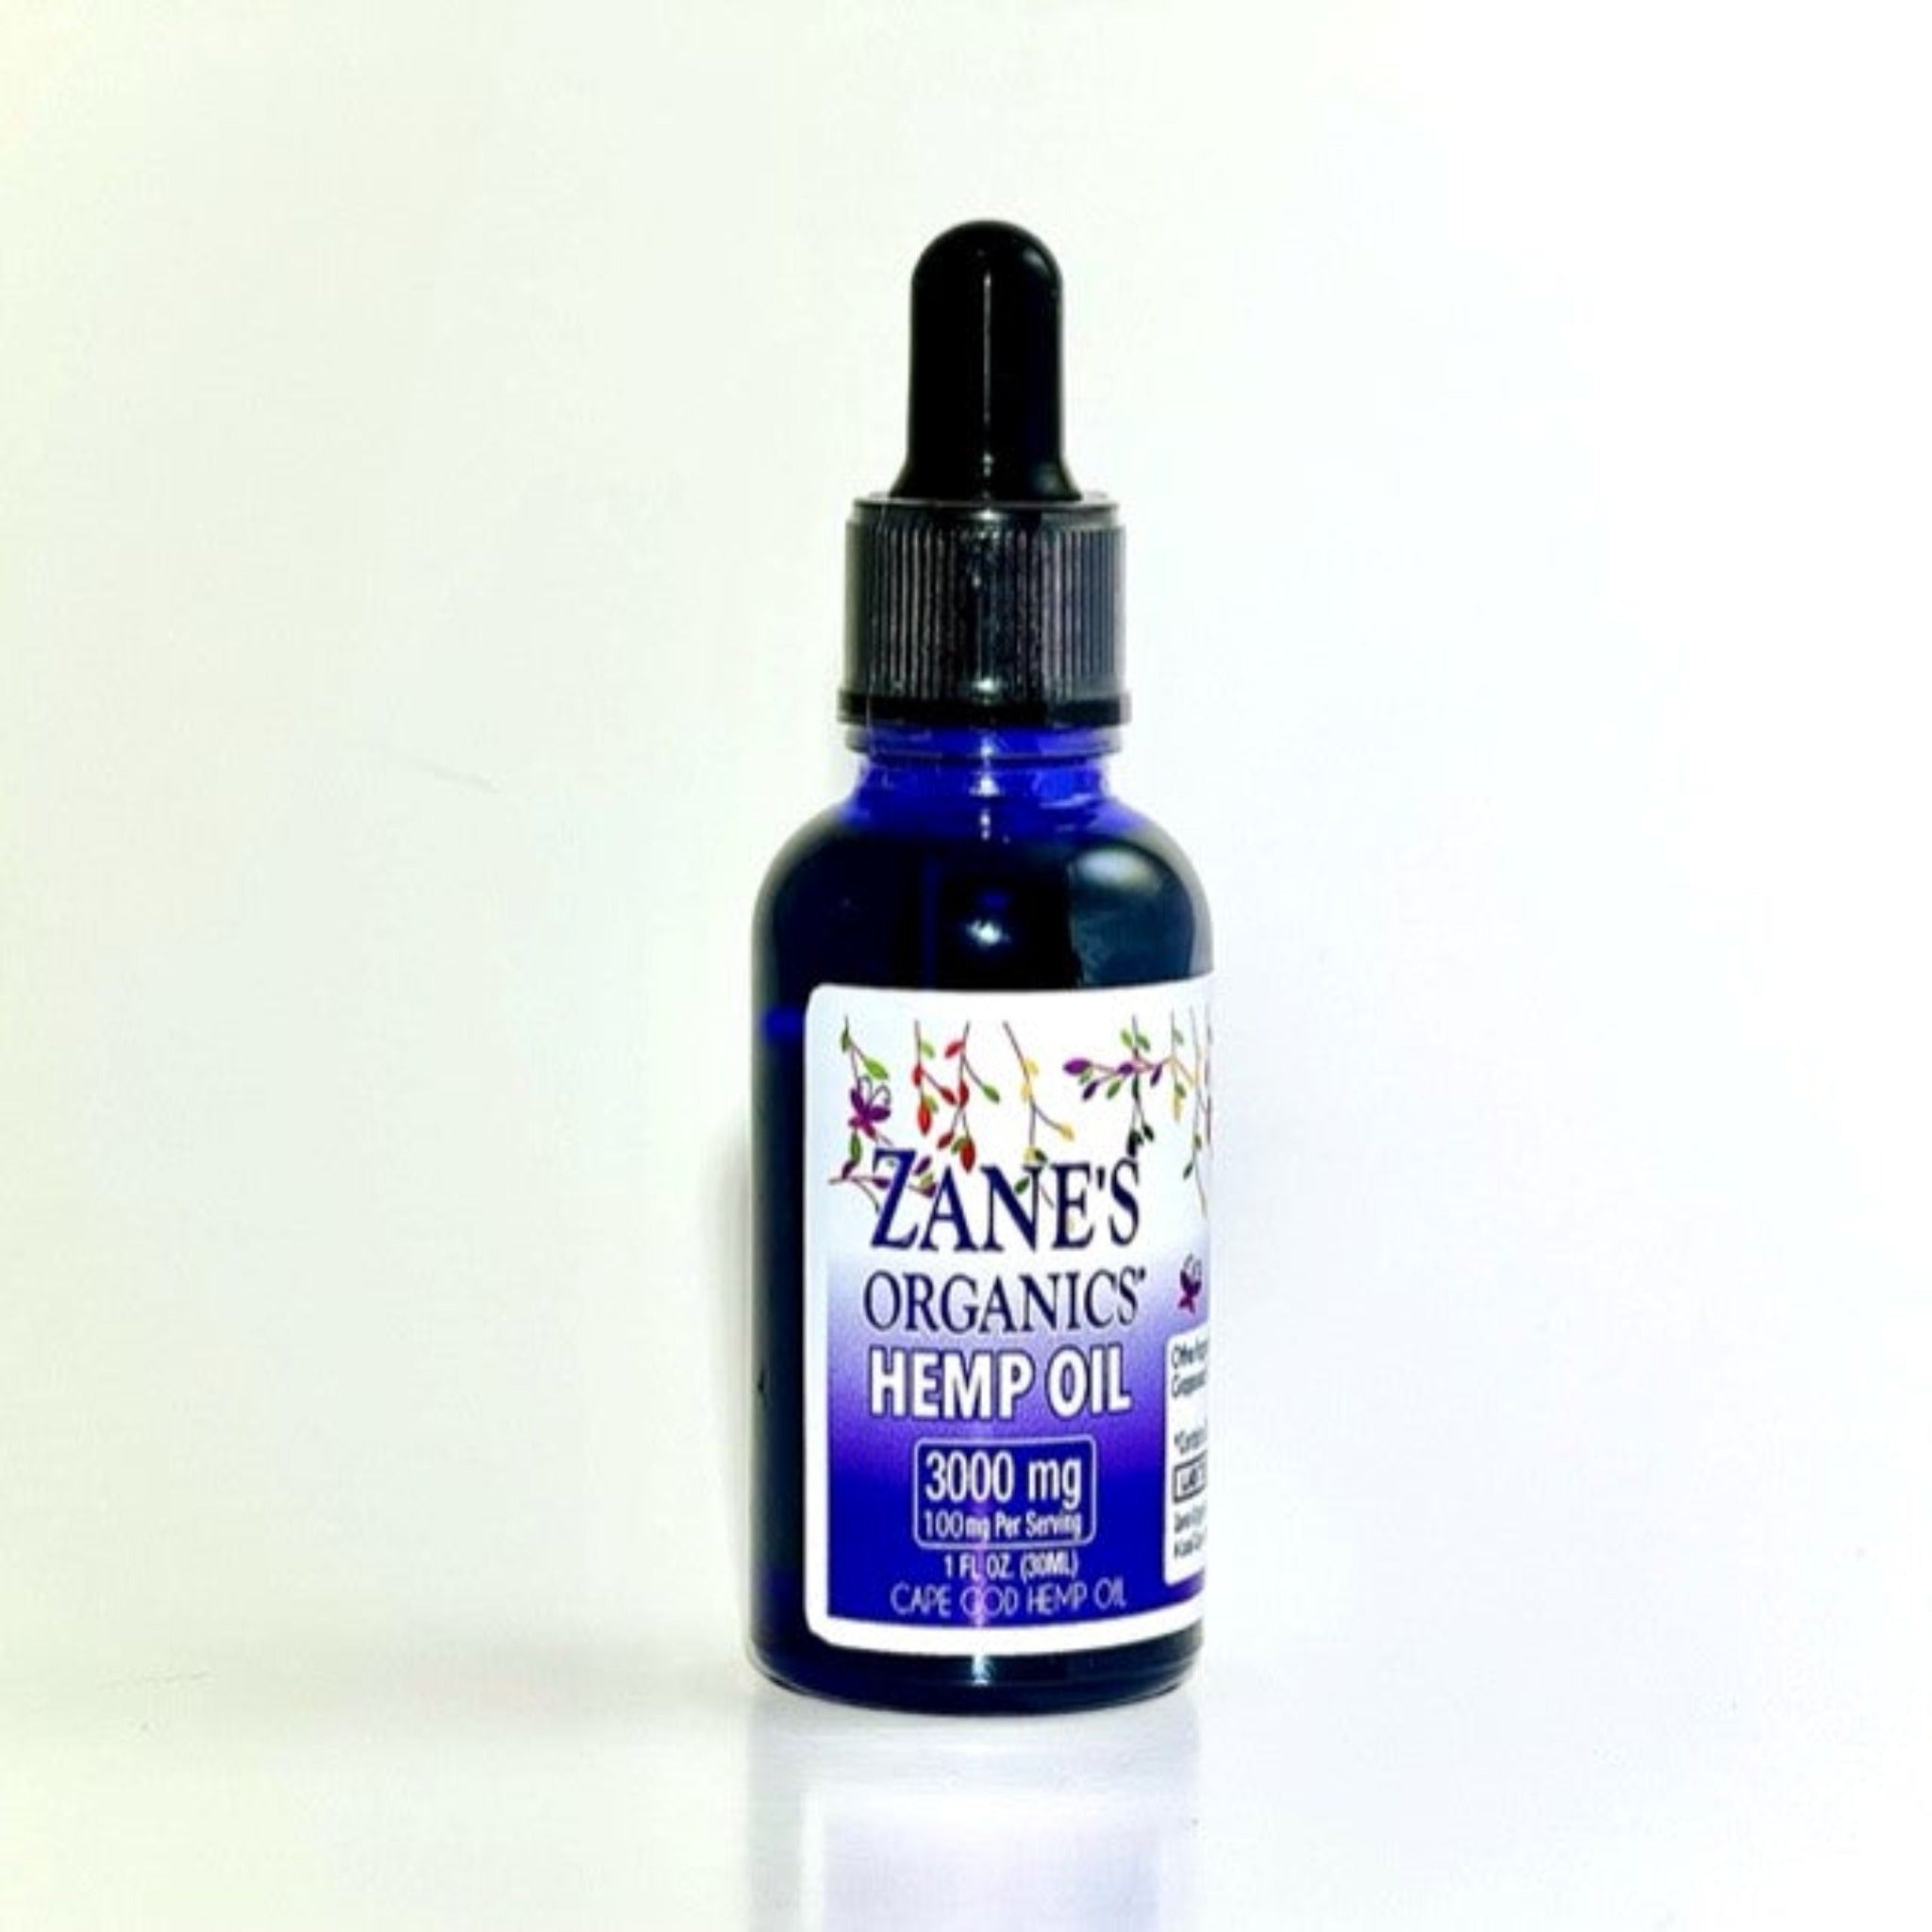 Zane's Organics 3000mg CBD Isolate no flavor